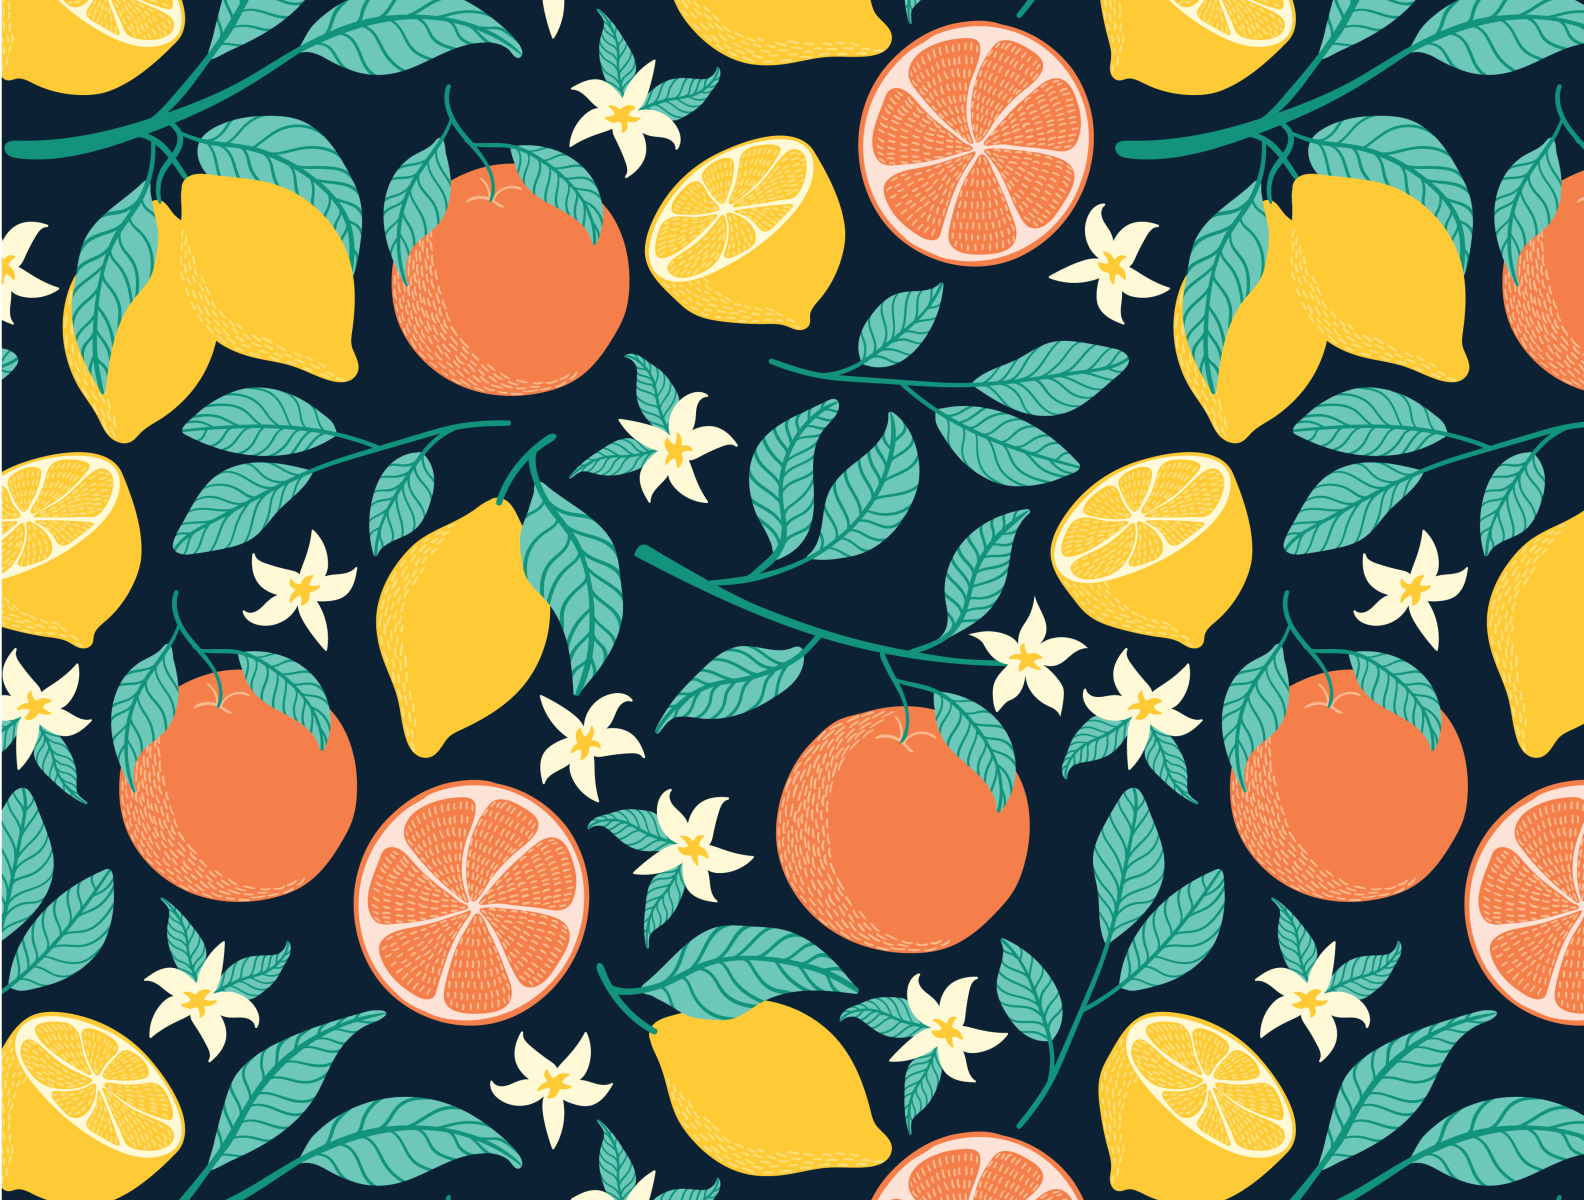 Citrus freshness by Irena Hristova on Dribbble